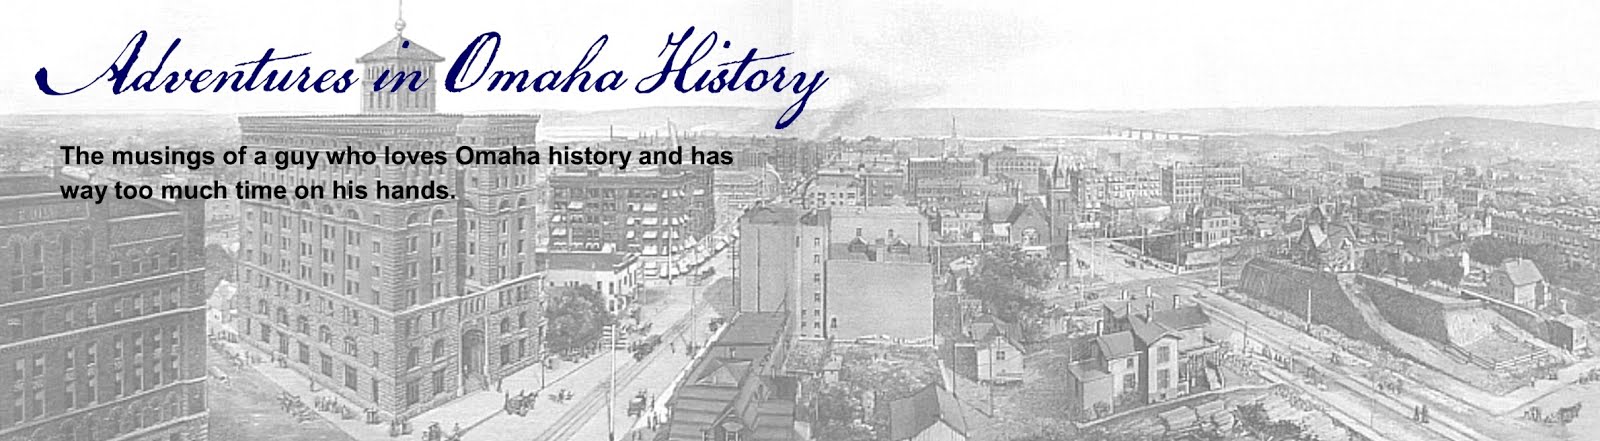 Adventures in Omaha History